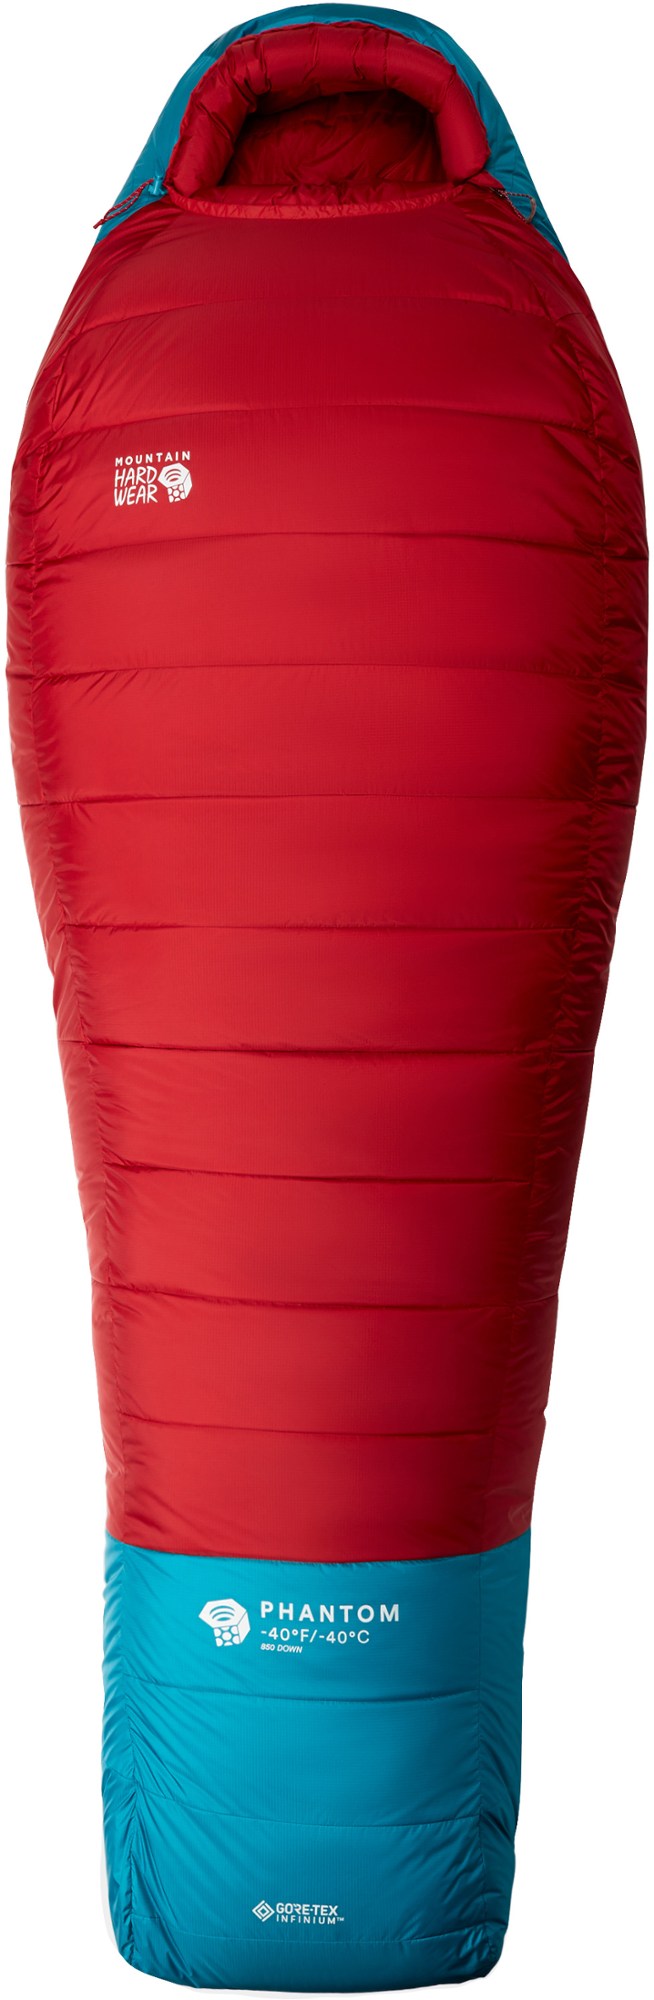 цена Спальный мешок Phantom GORE-TEX -40 Mountain Hardwear, красный